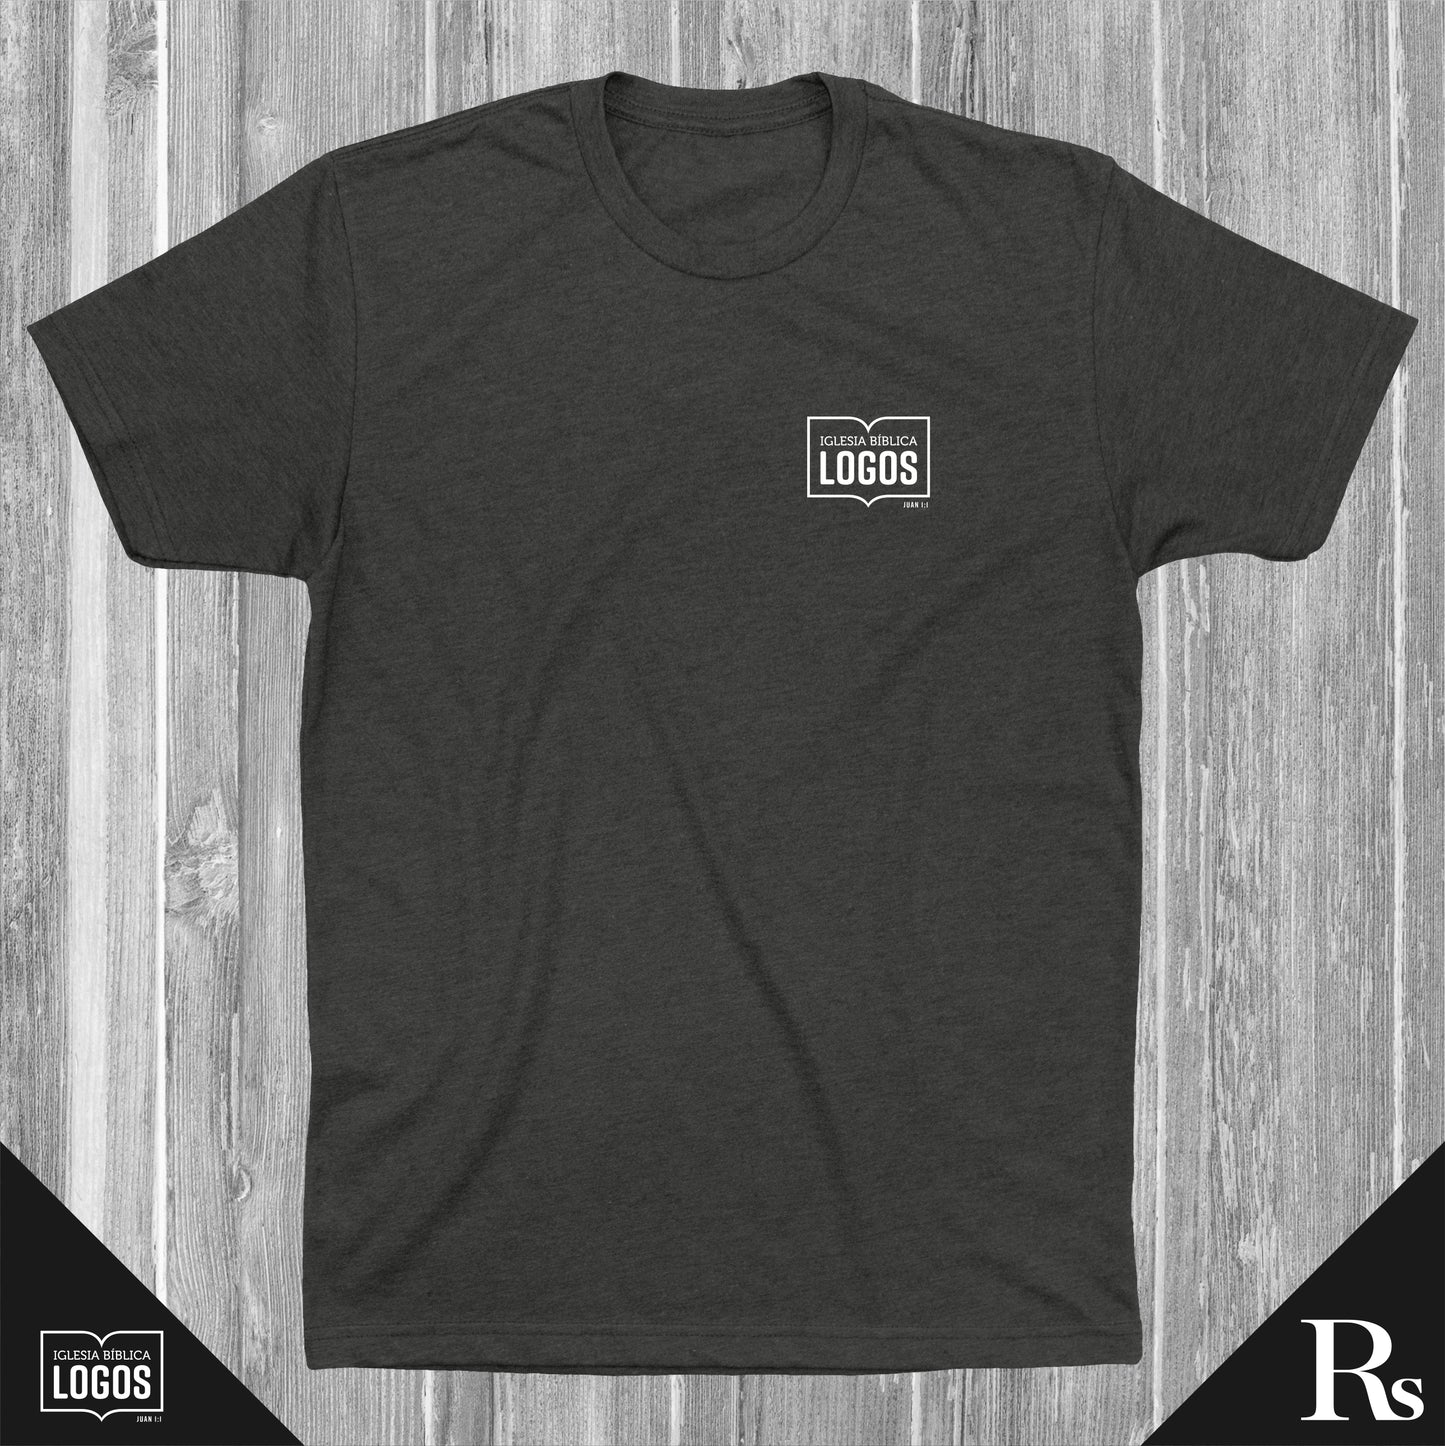 Iglesia Biblica Logos HEATHER BLACK | Rs T-shirts